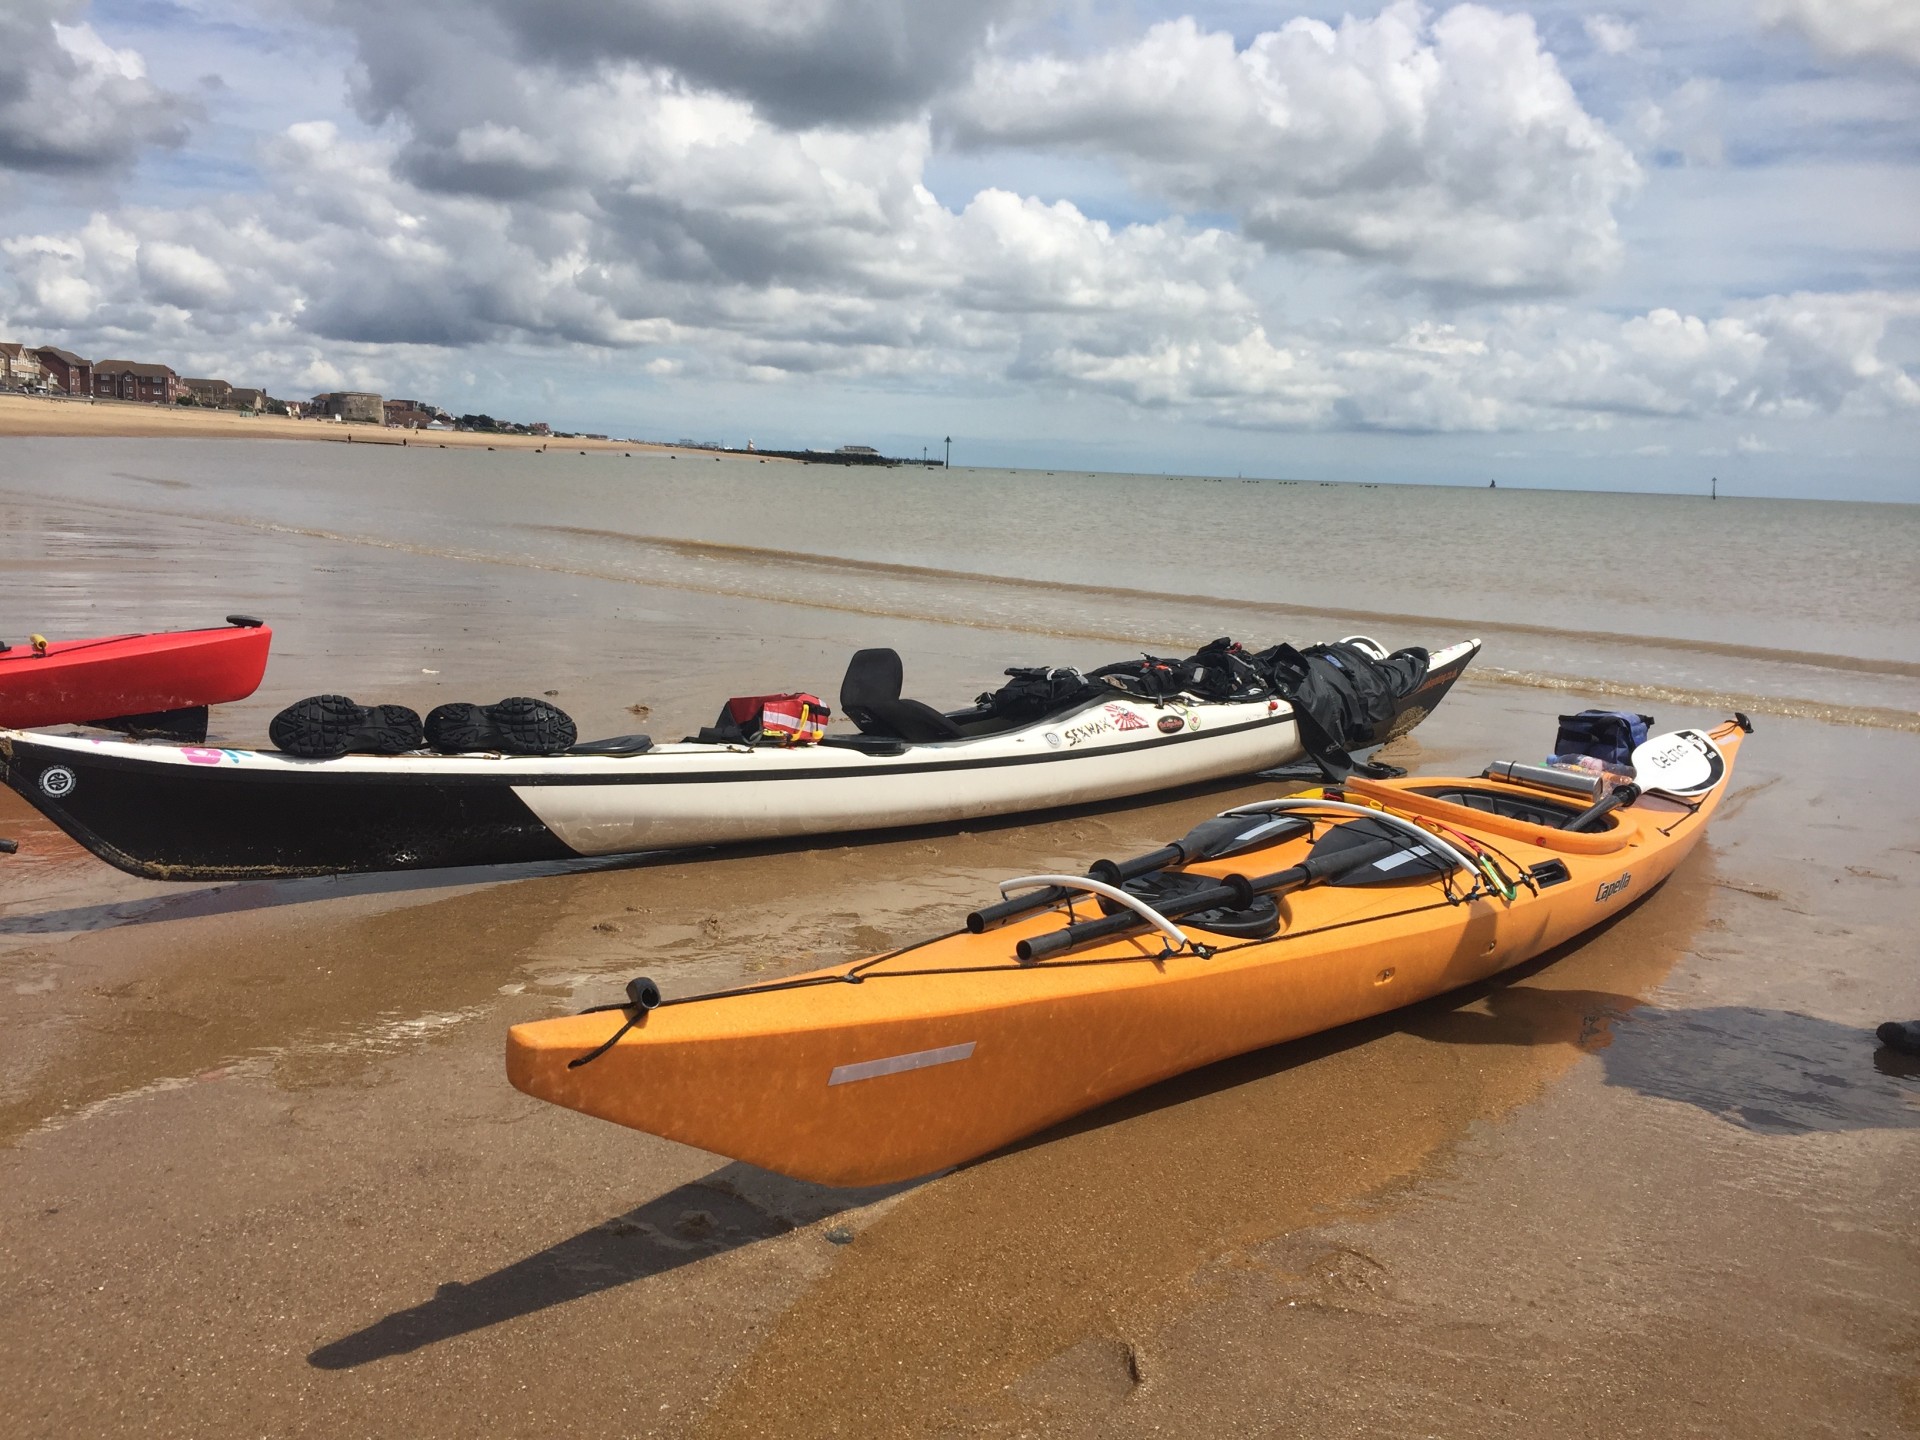 Sea kayaks on a sandy beach in Suffolk.